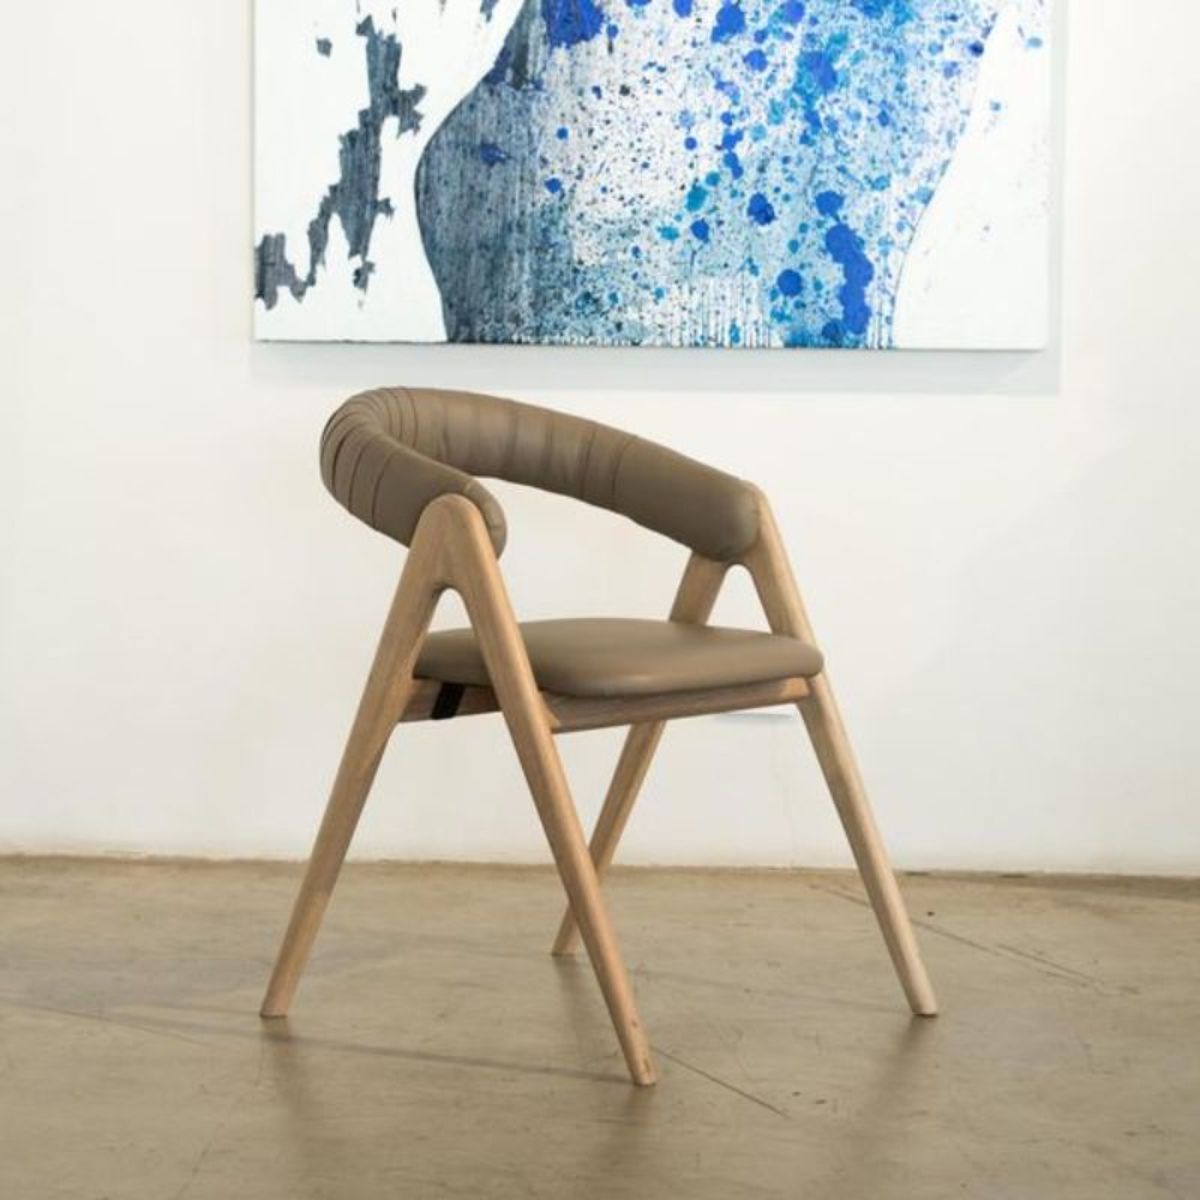 designer-furniture-split-chair-min